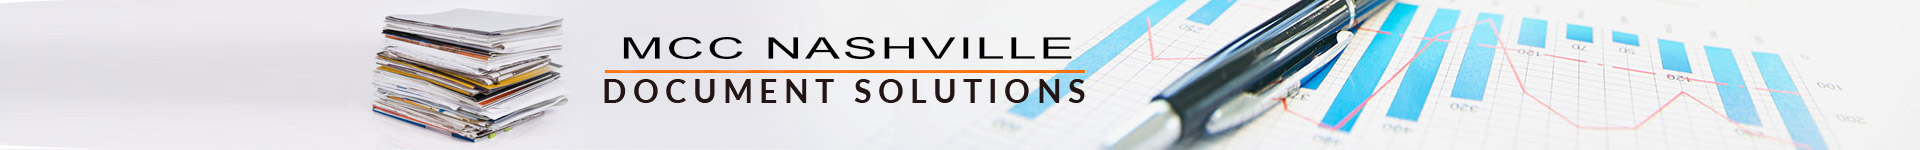 MCC Nashville Document Solutions copiers and printers